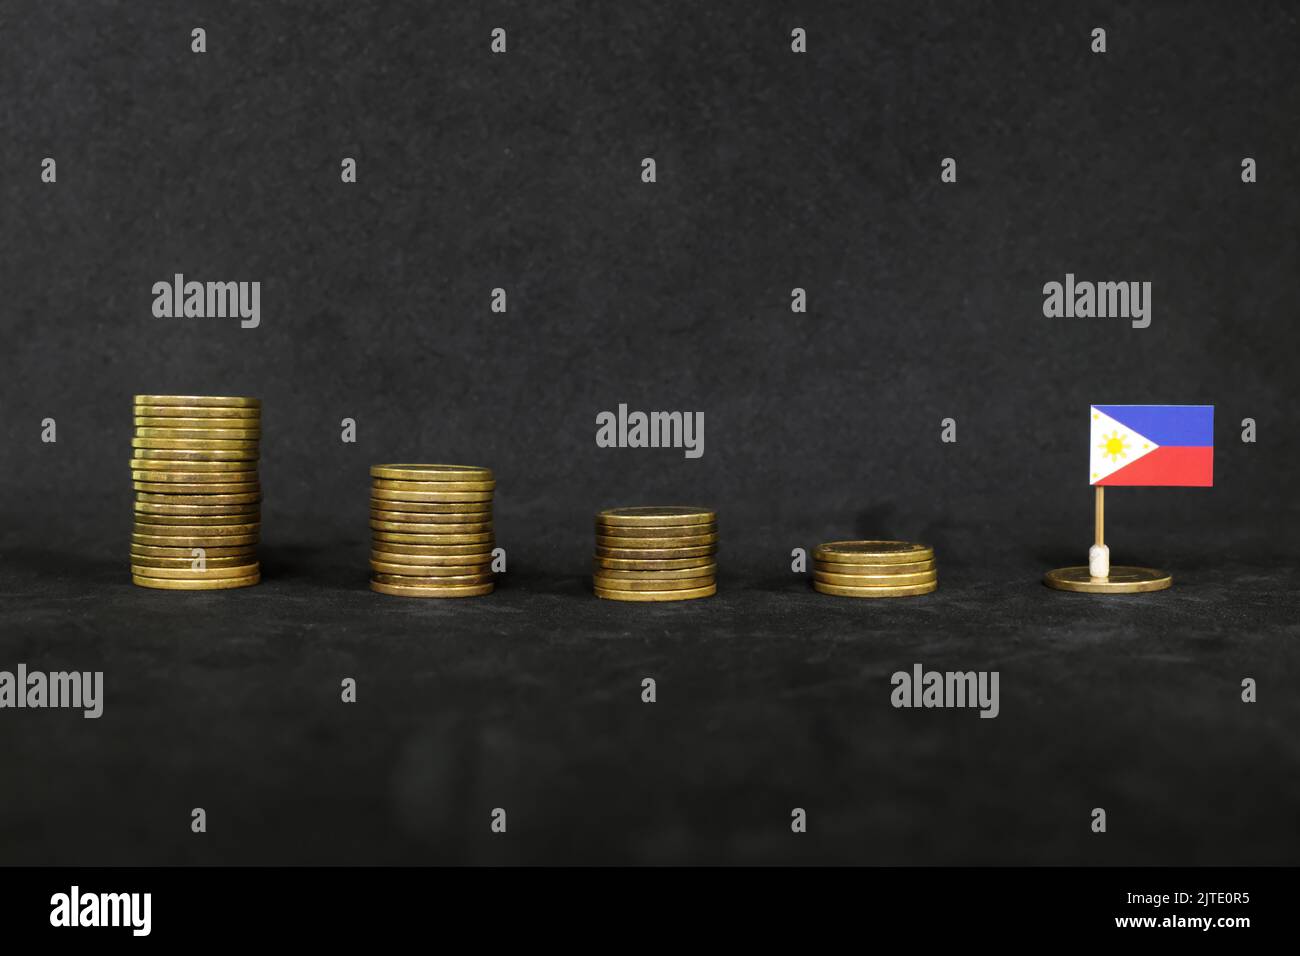 Philippines economic recession, financial crisis and peso depreciation concept. Philippine flag in decreasing stack of coins in dark black background. Stock Photo